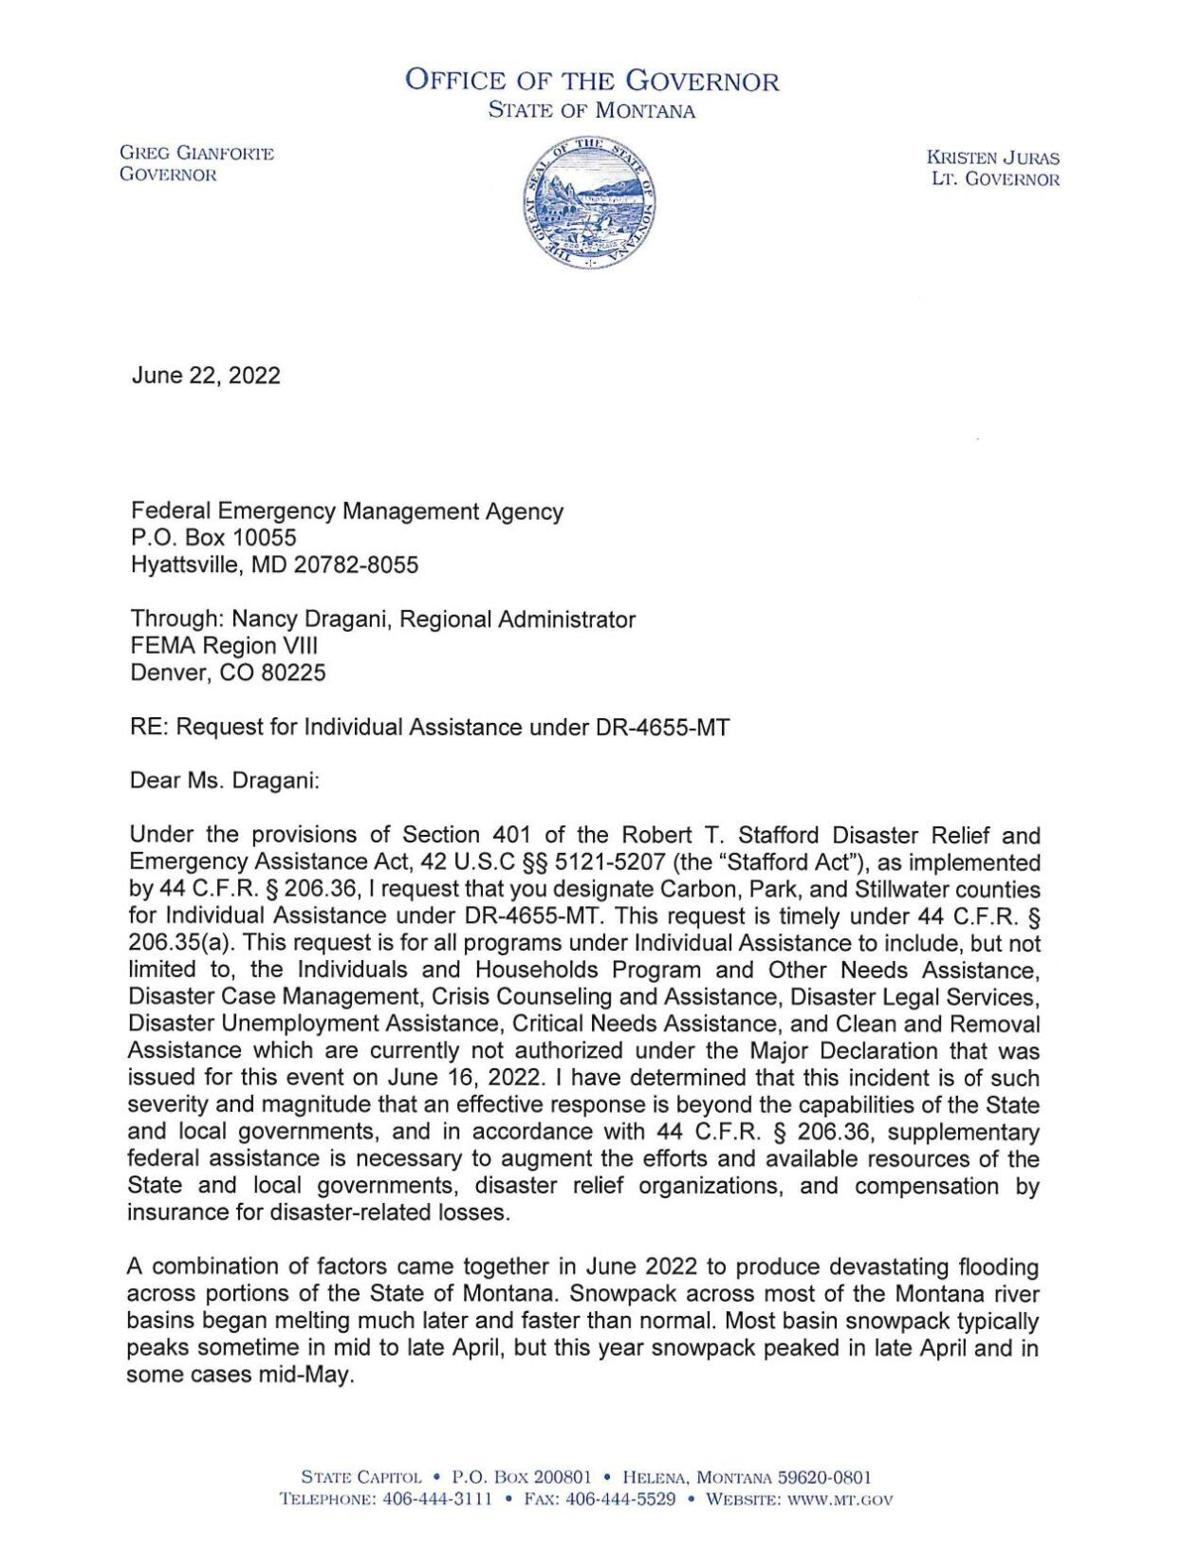 Letter from FEMA regarding flood activity